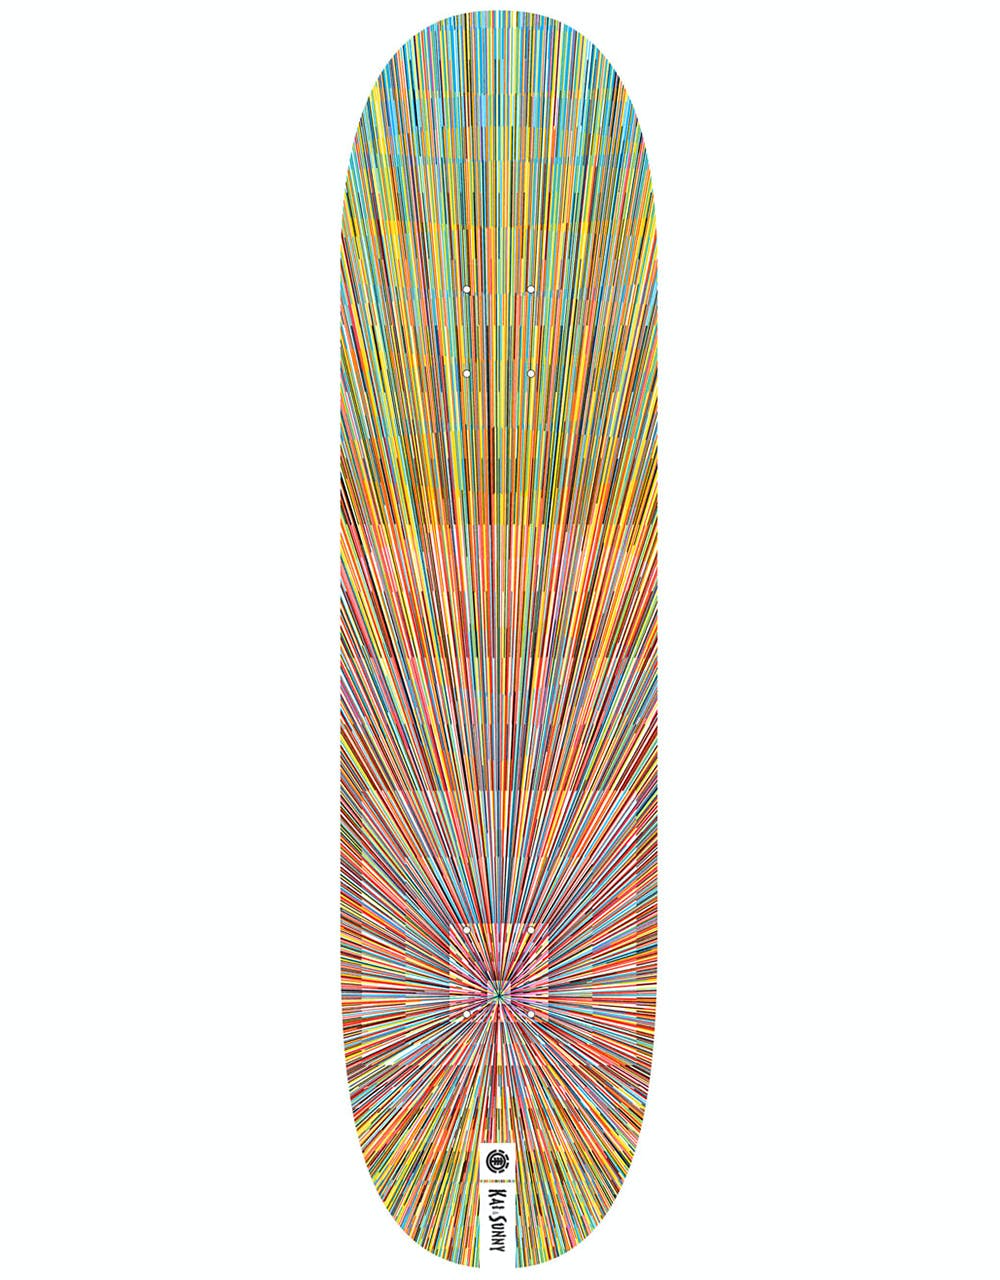 Element x Kai & Sunny Brighter Days Skateboard Deck - 8"